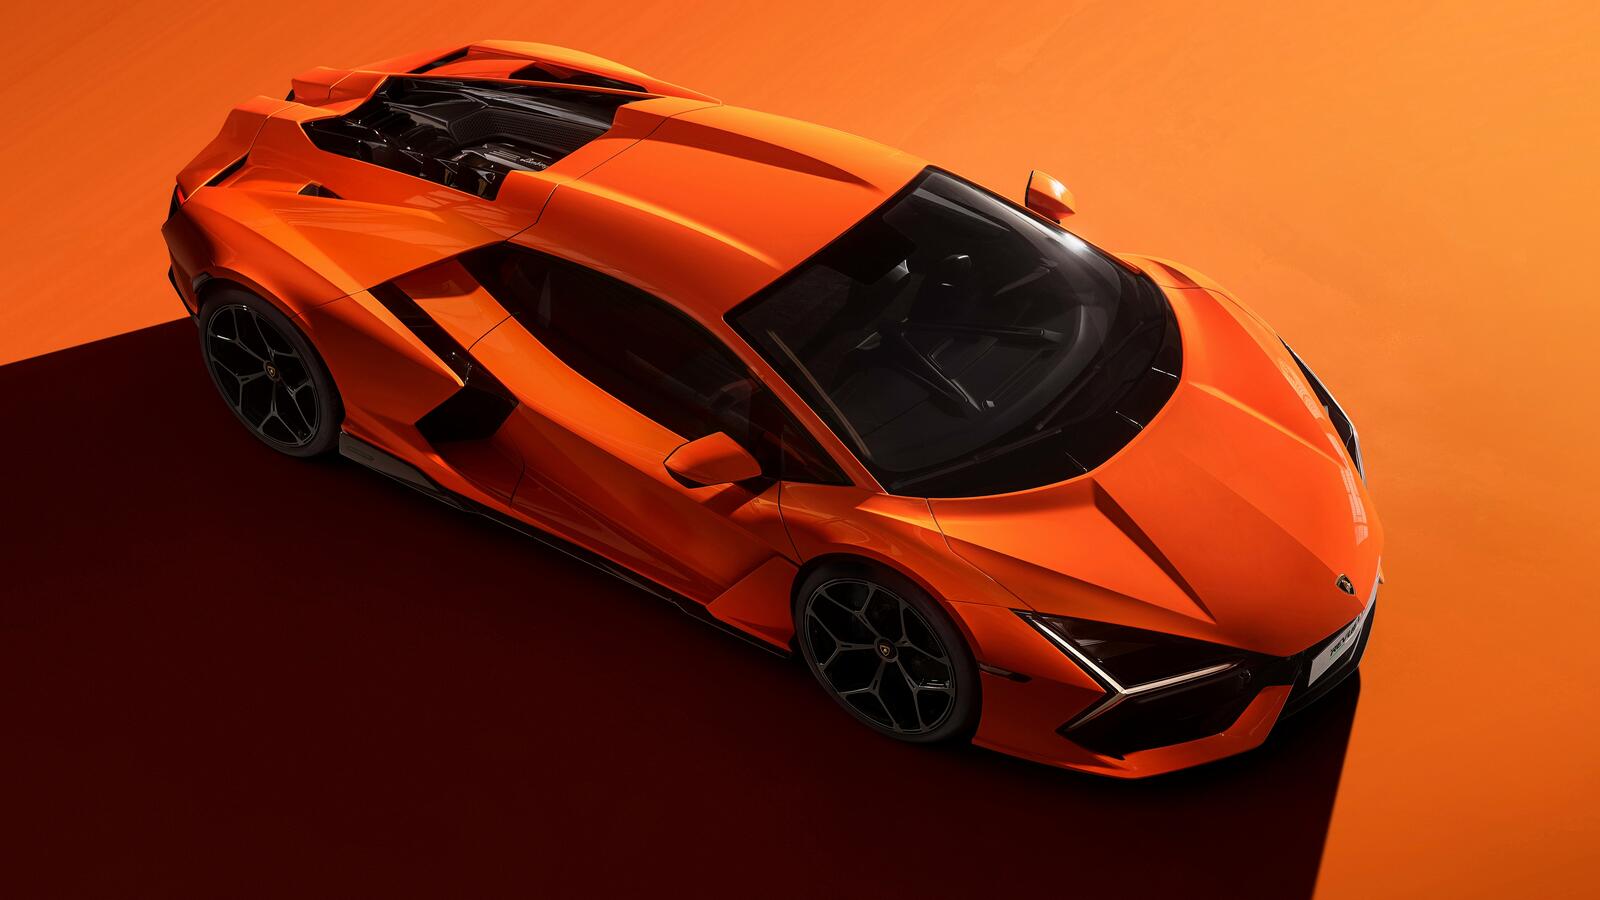 Free photo Orange Lamborghini Revuelto on orange background